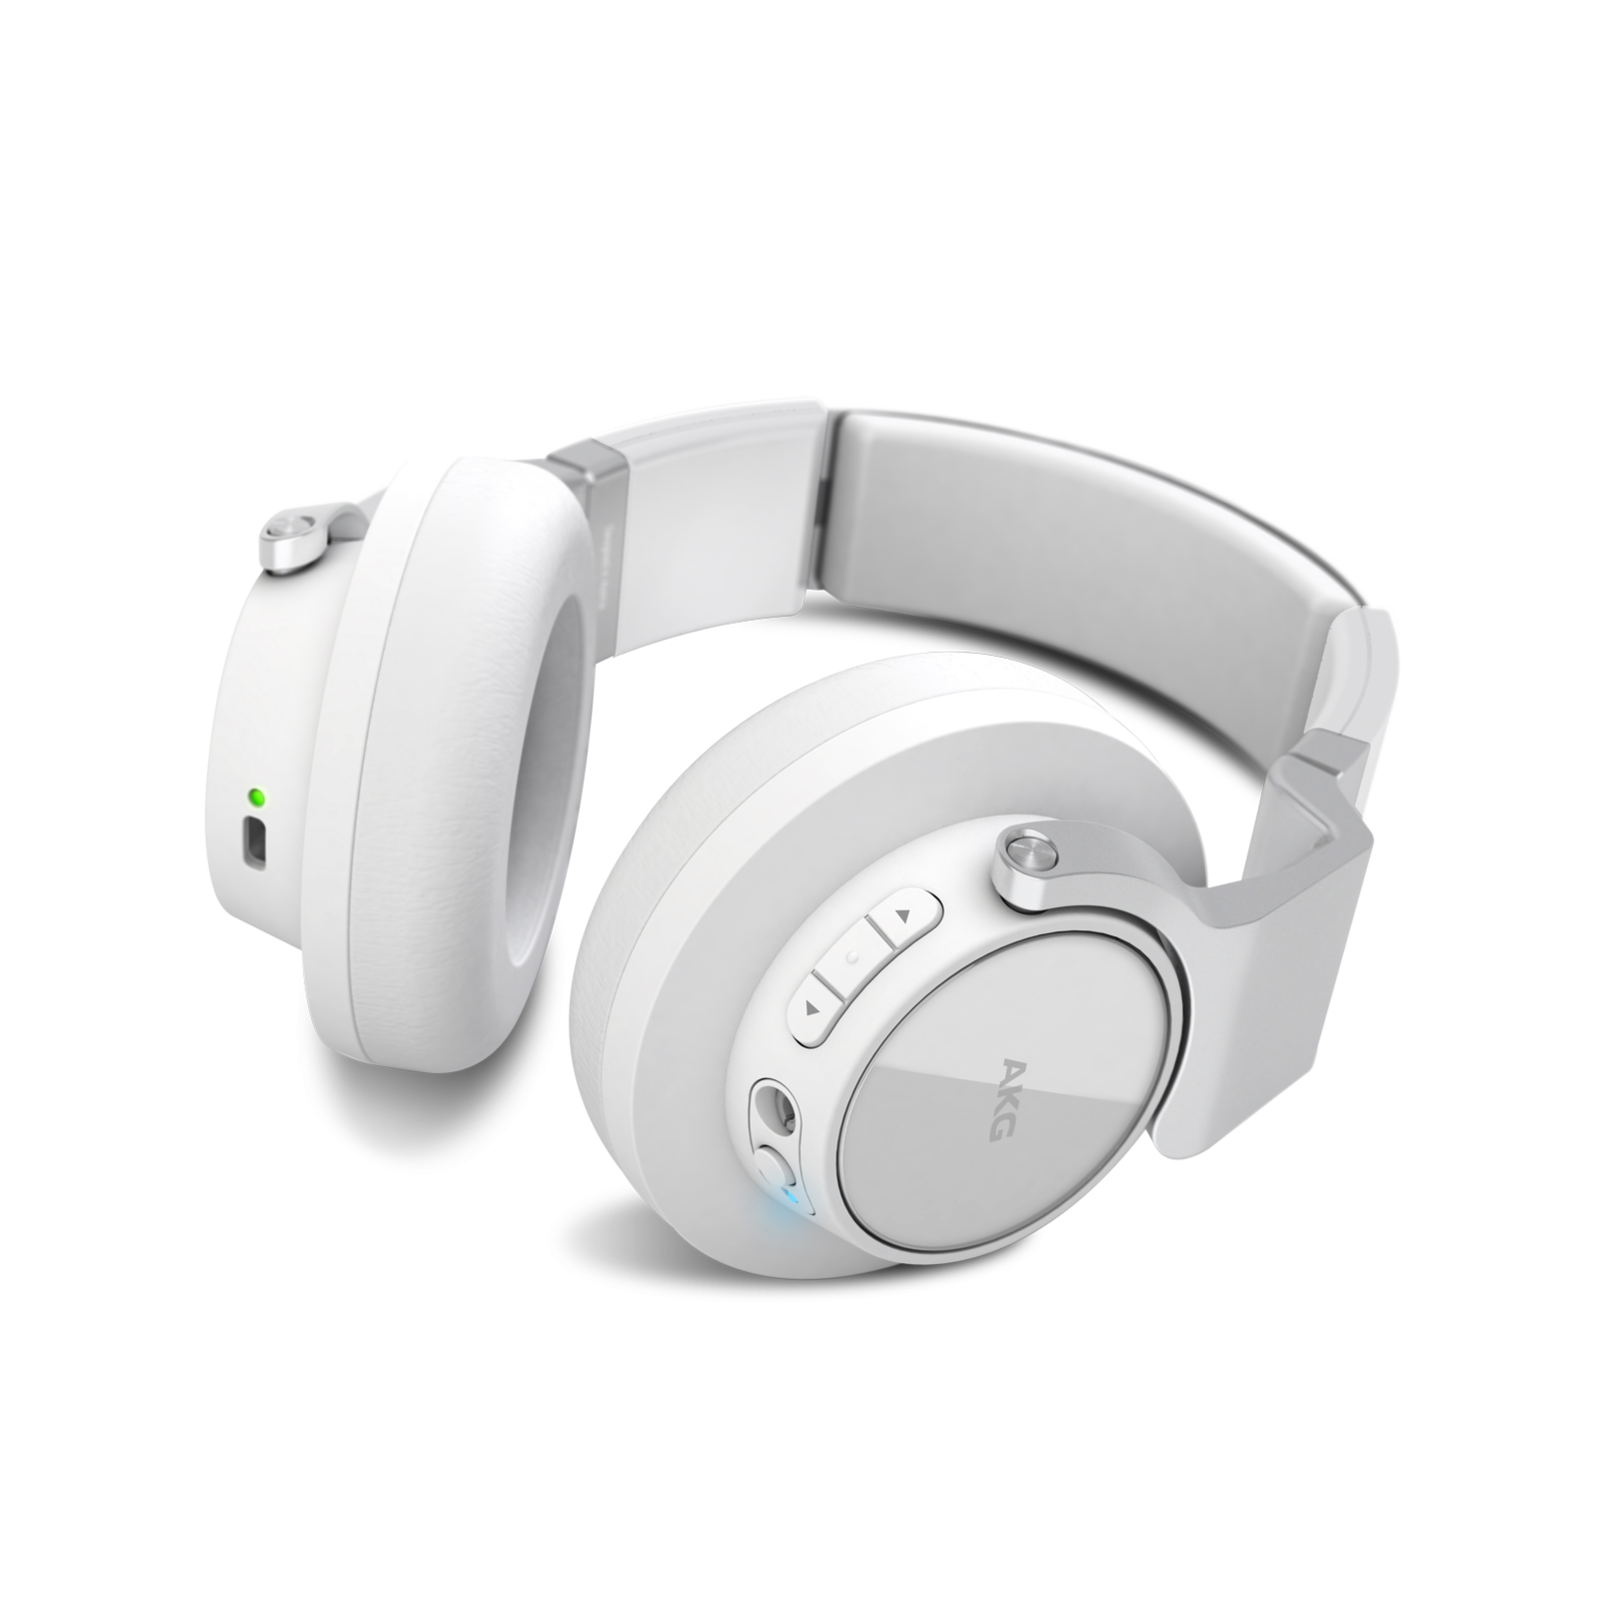 K 845BT - White - High performance over-ear wireless headphones with Bluetooth - Detailshot 1